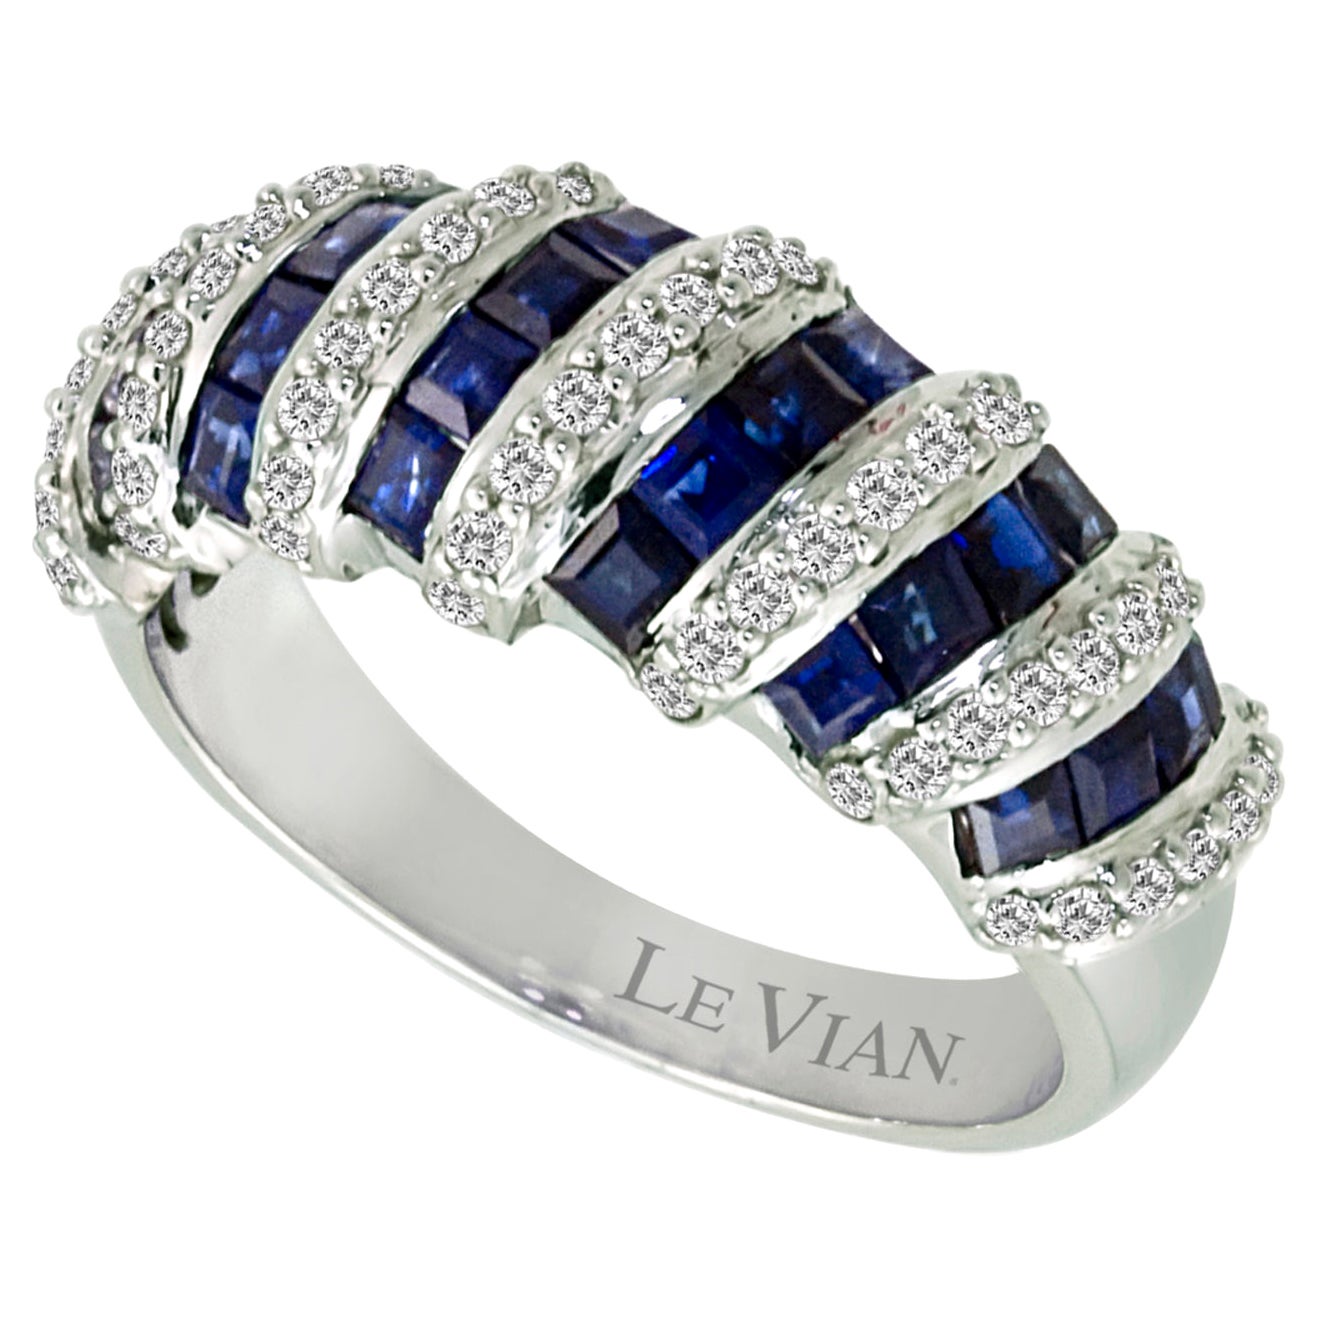 LeVian 14K White Gold Blue Sapphire Round Diamond Classic Pretty Cocktail Ring